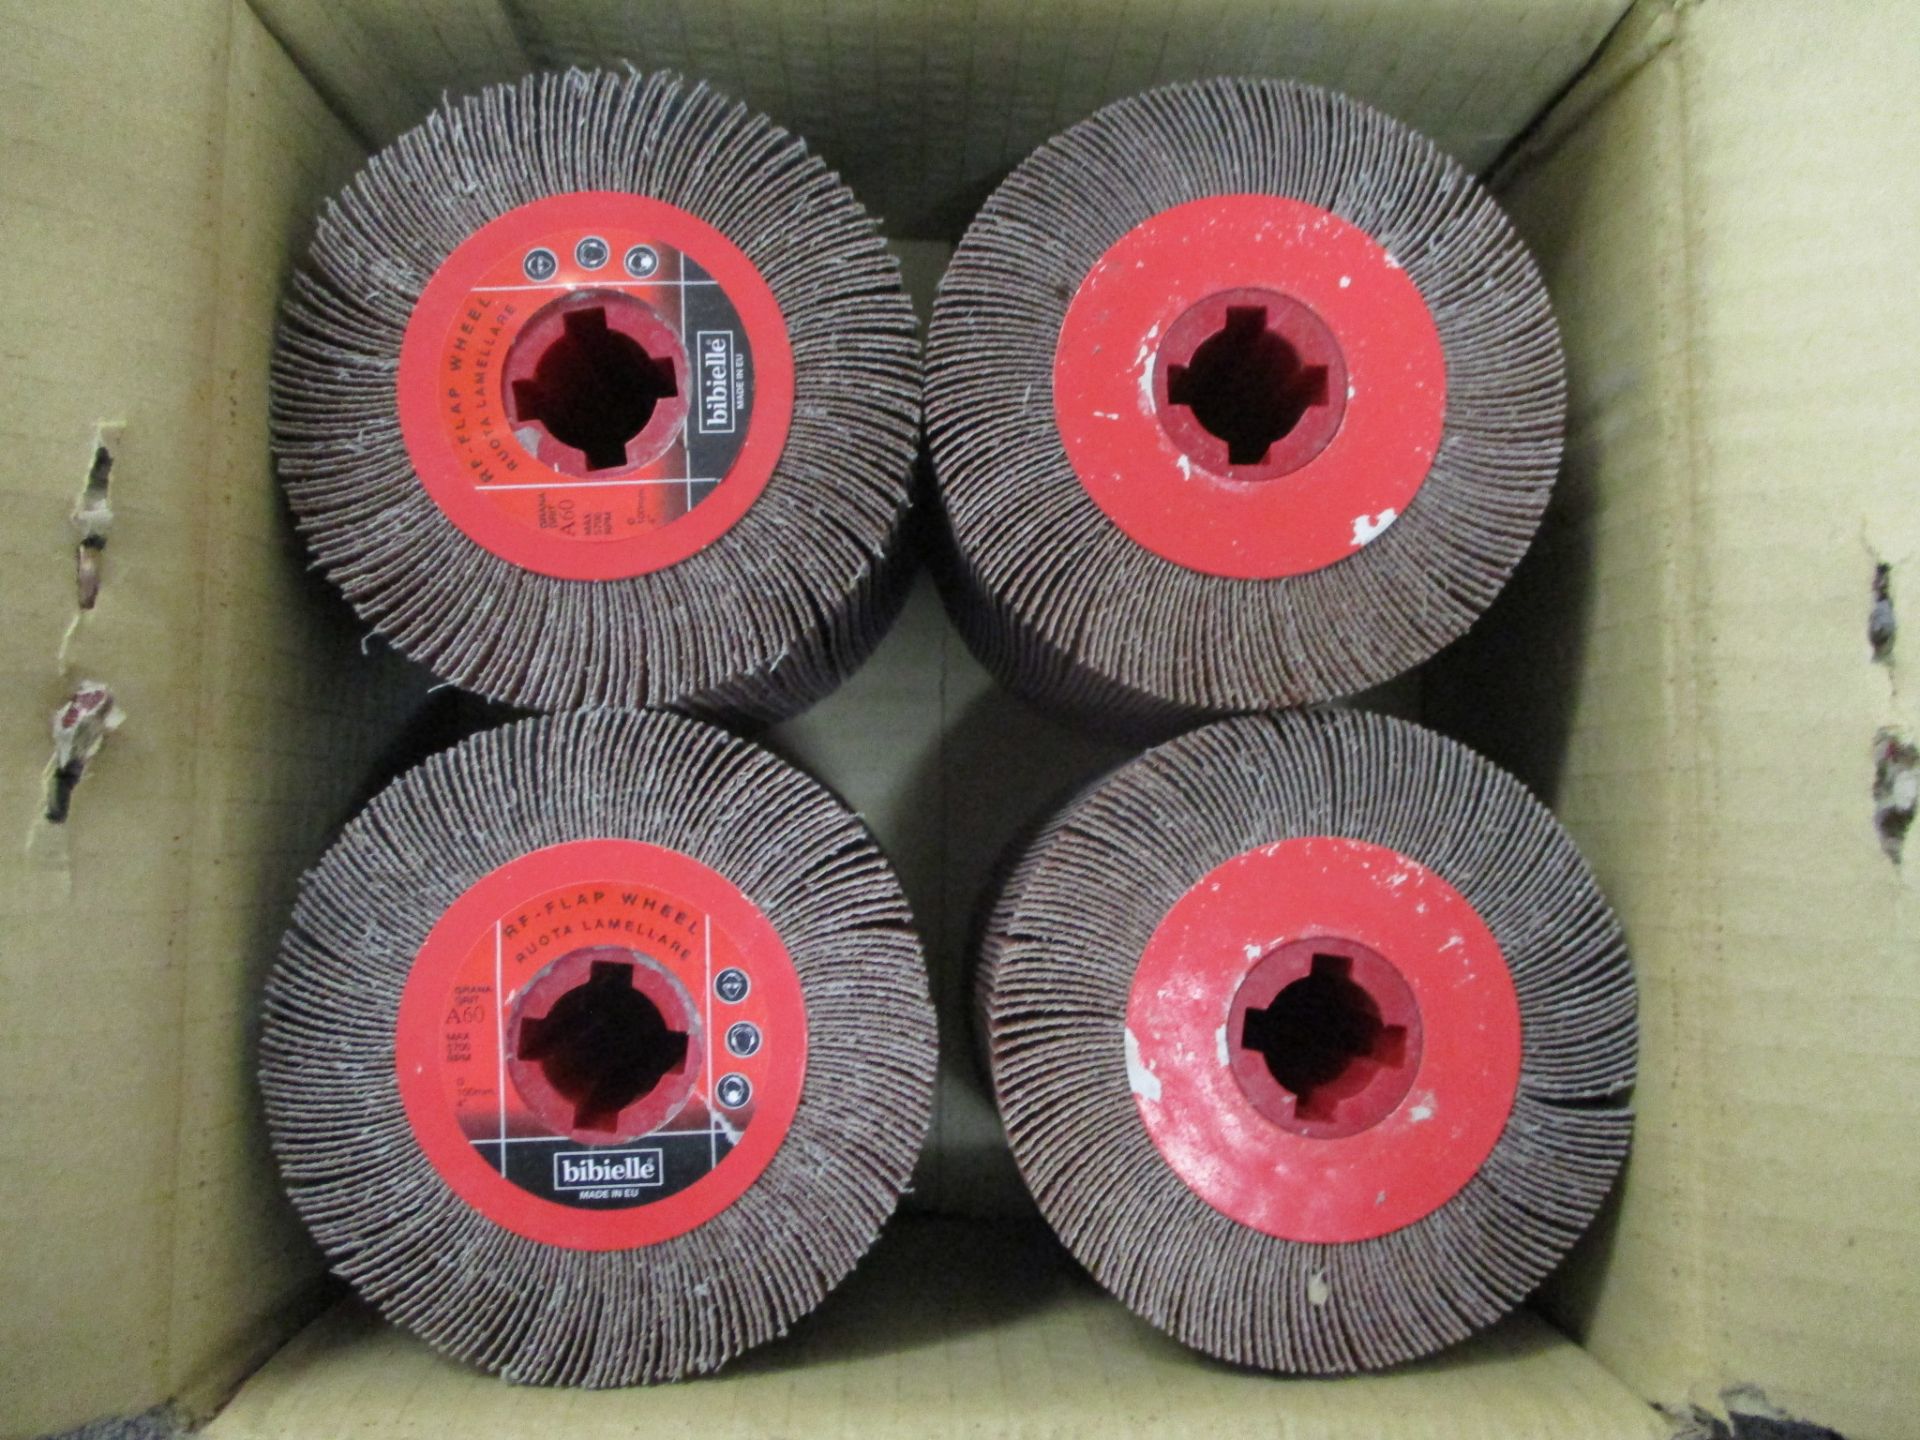 4 x Boxes of Bibielle RF0613 Abrasive Wheels, Aluminium Oxide 100 x 100 Grit P60 (16 x Wheels in